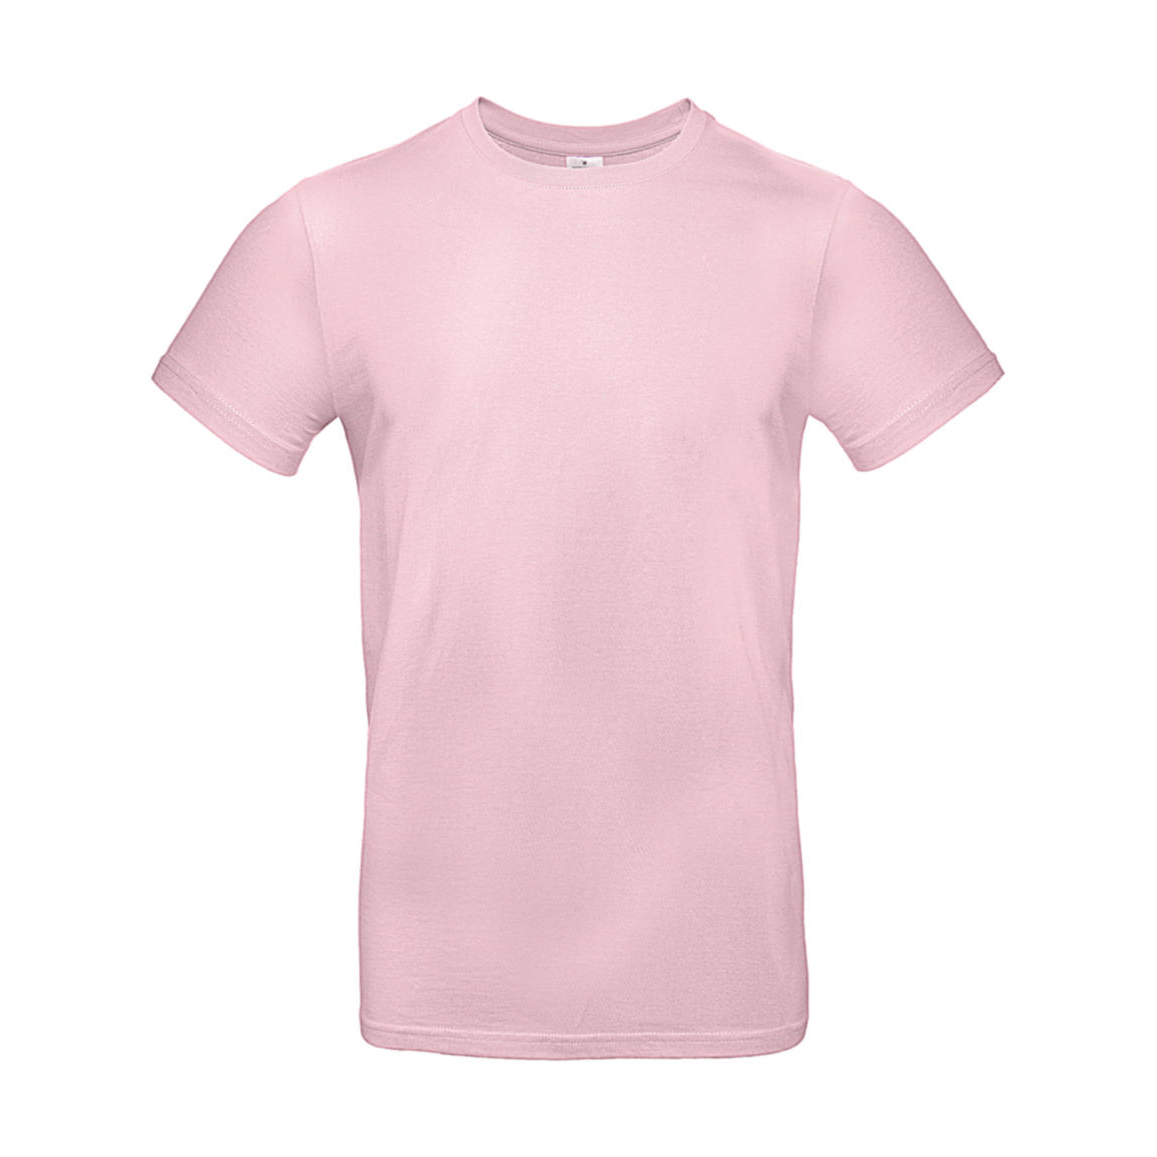 Triko pánské B&C E190 T-Shirt - světle růžové, S